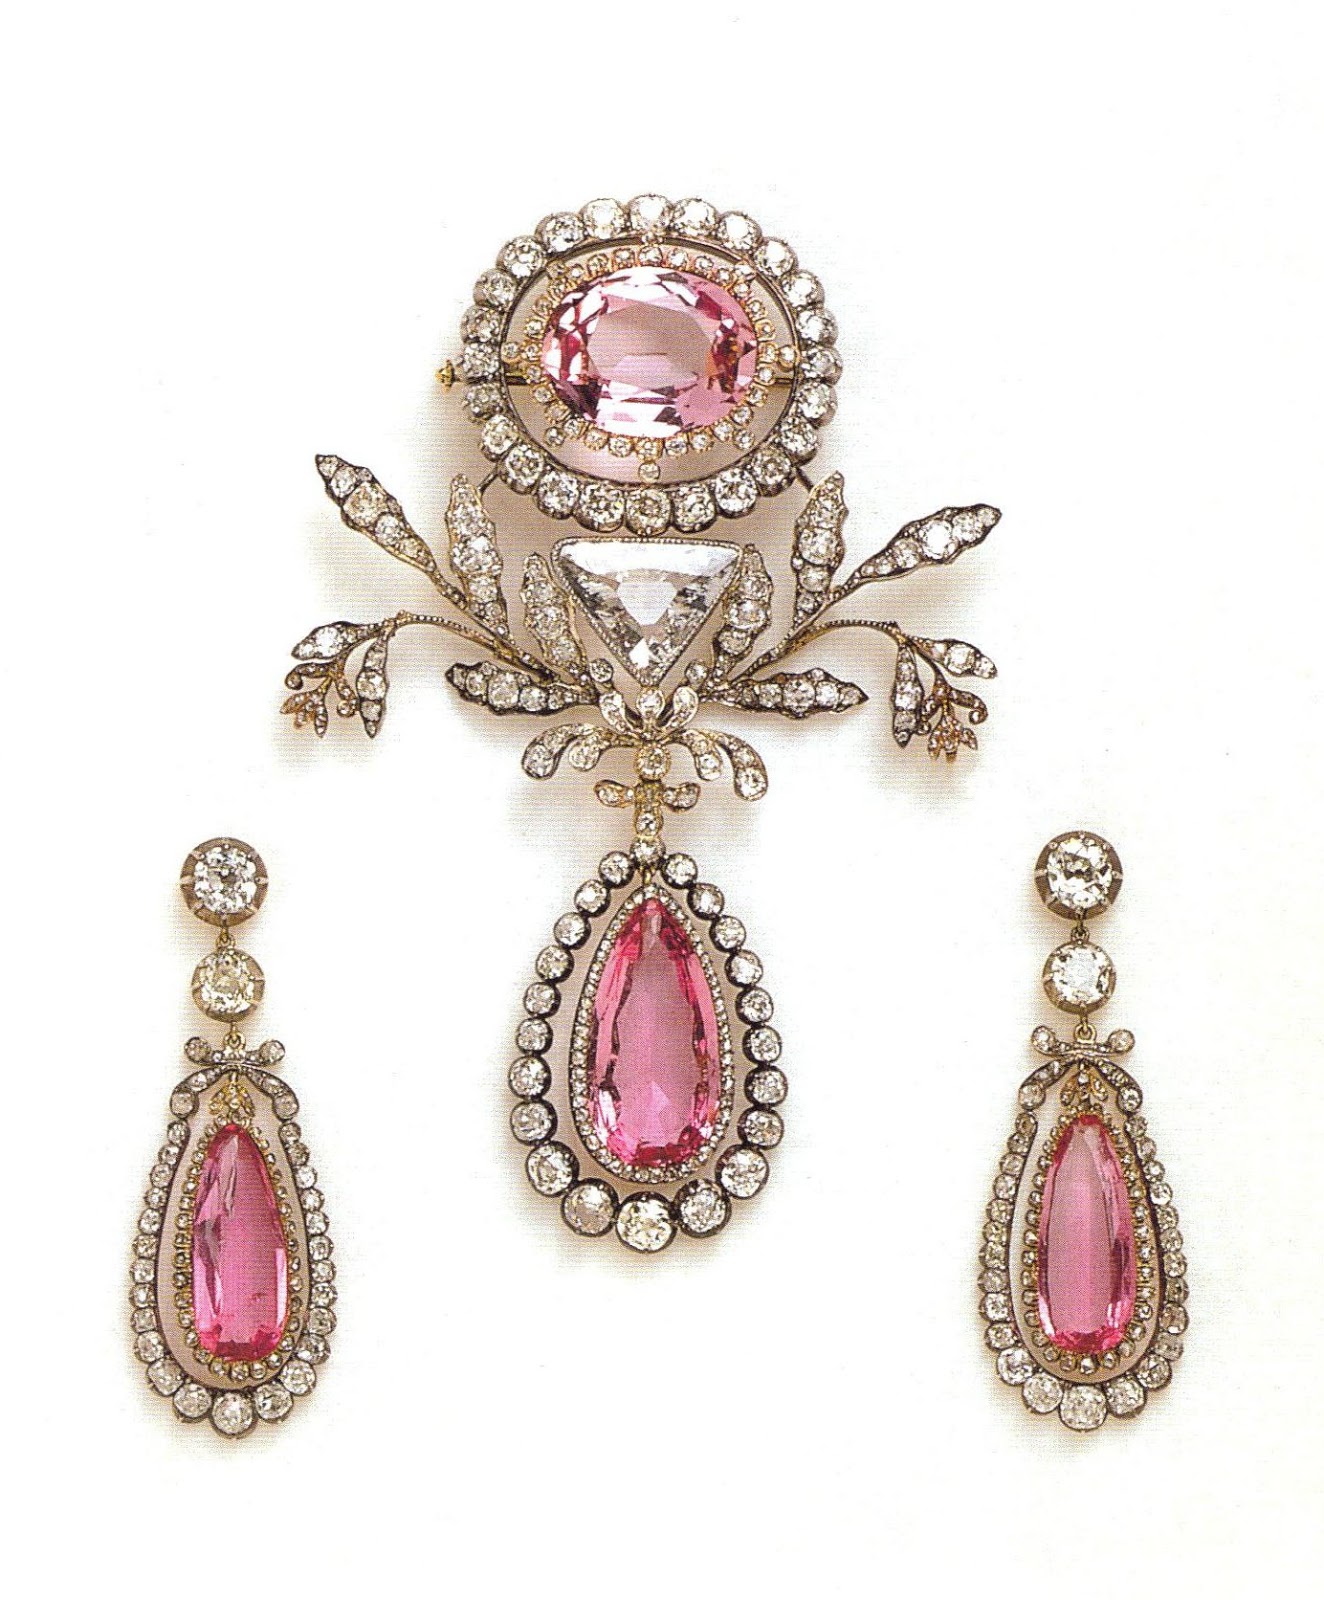 Royal Juwelen